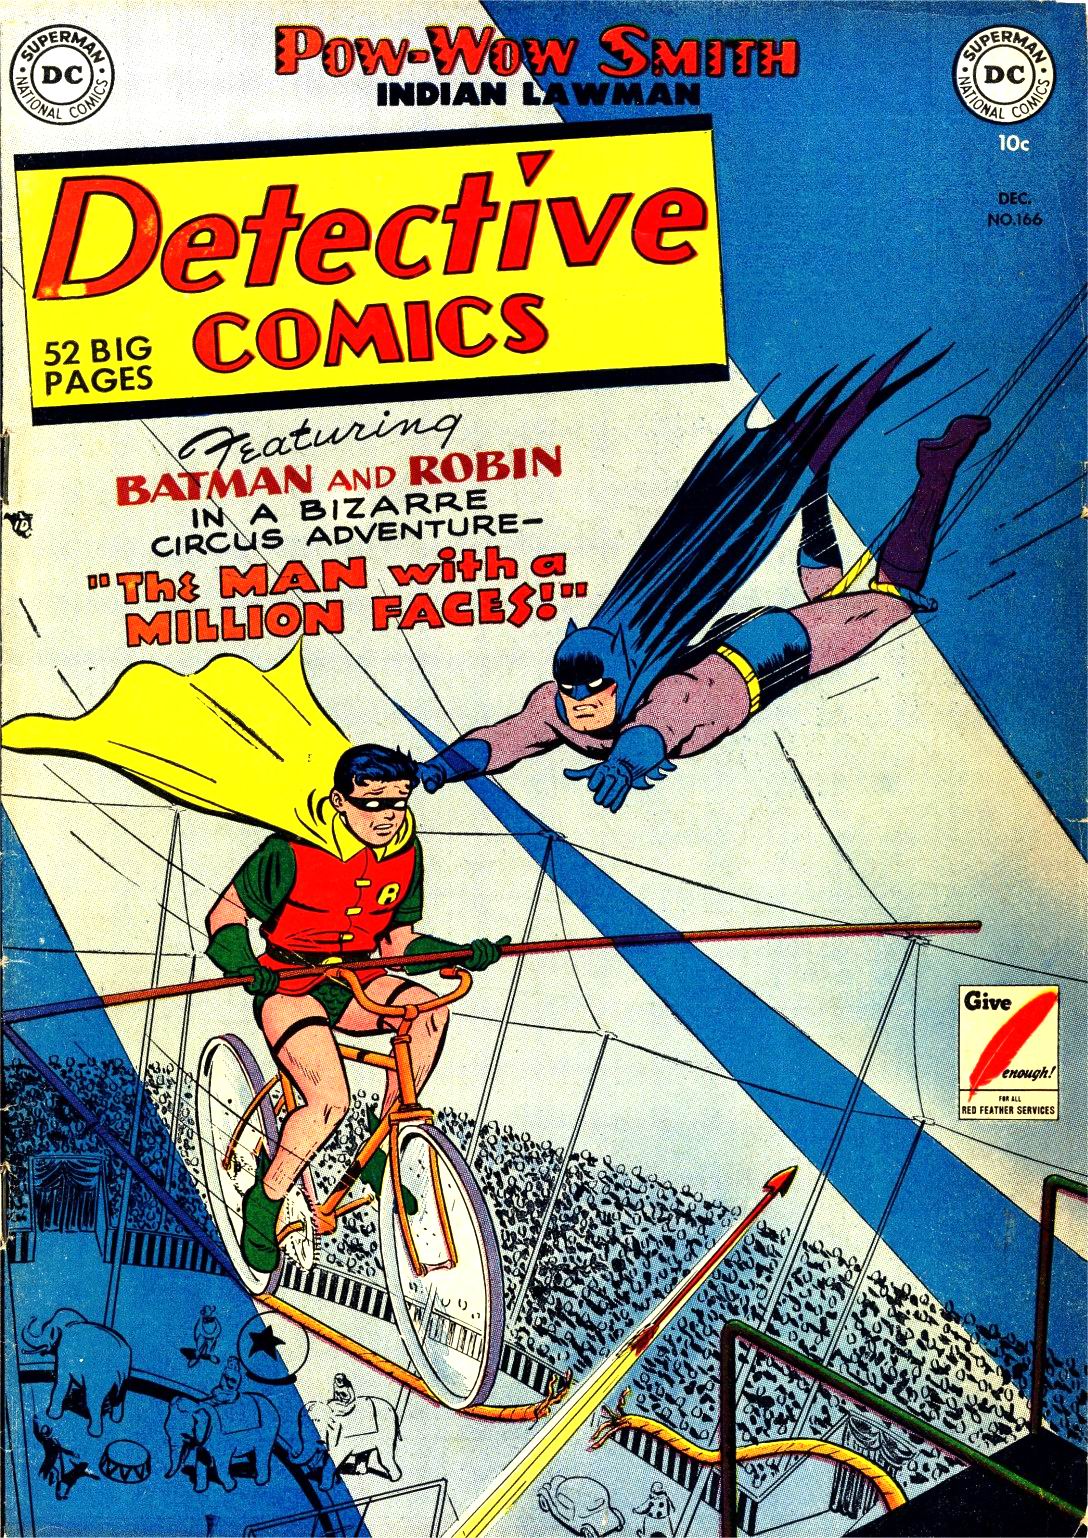 Detective Comics Issue 166 | Batman Wiki | Fandom